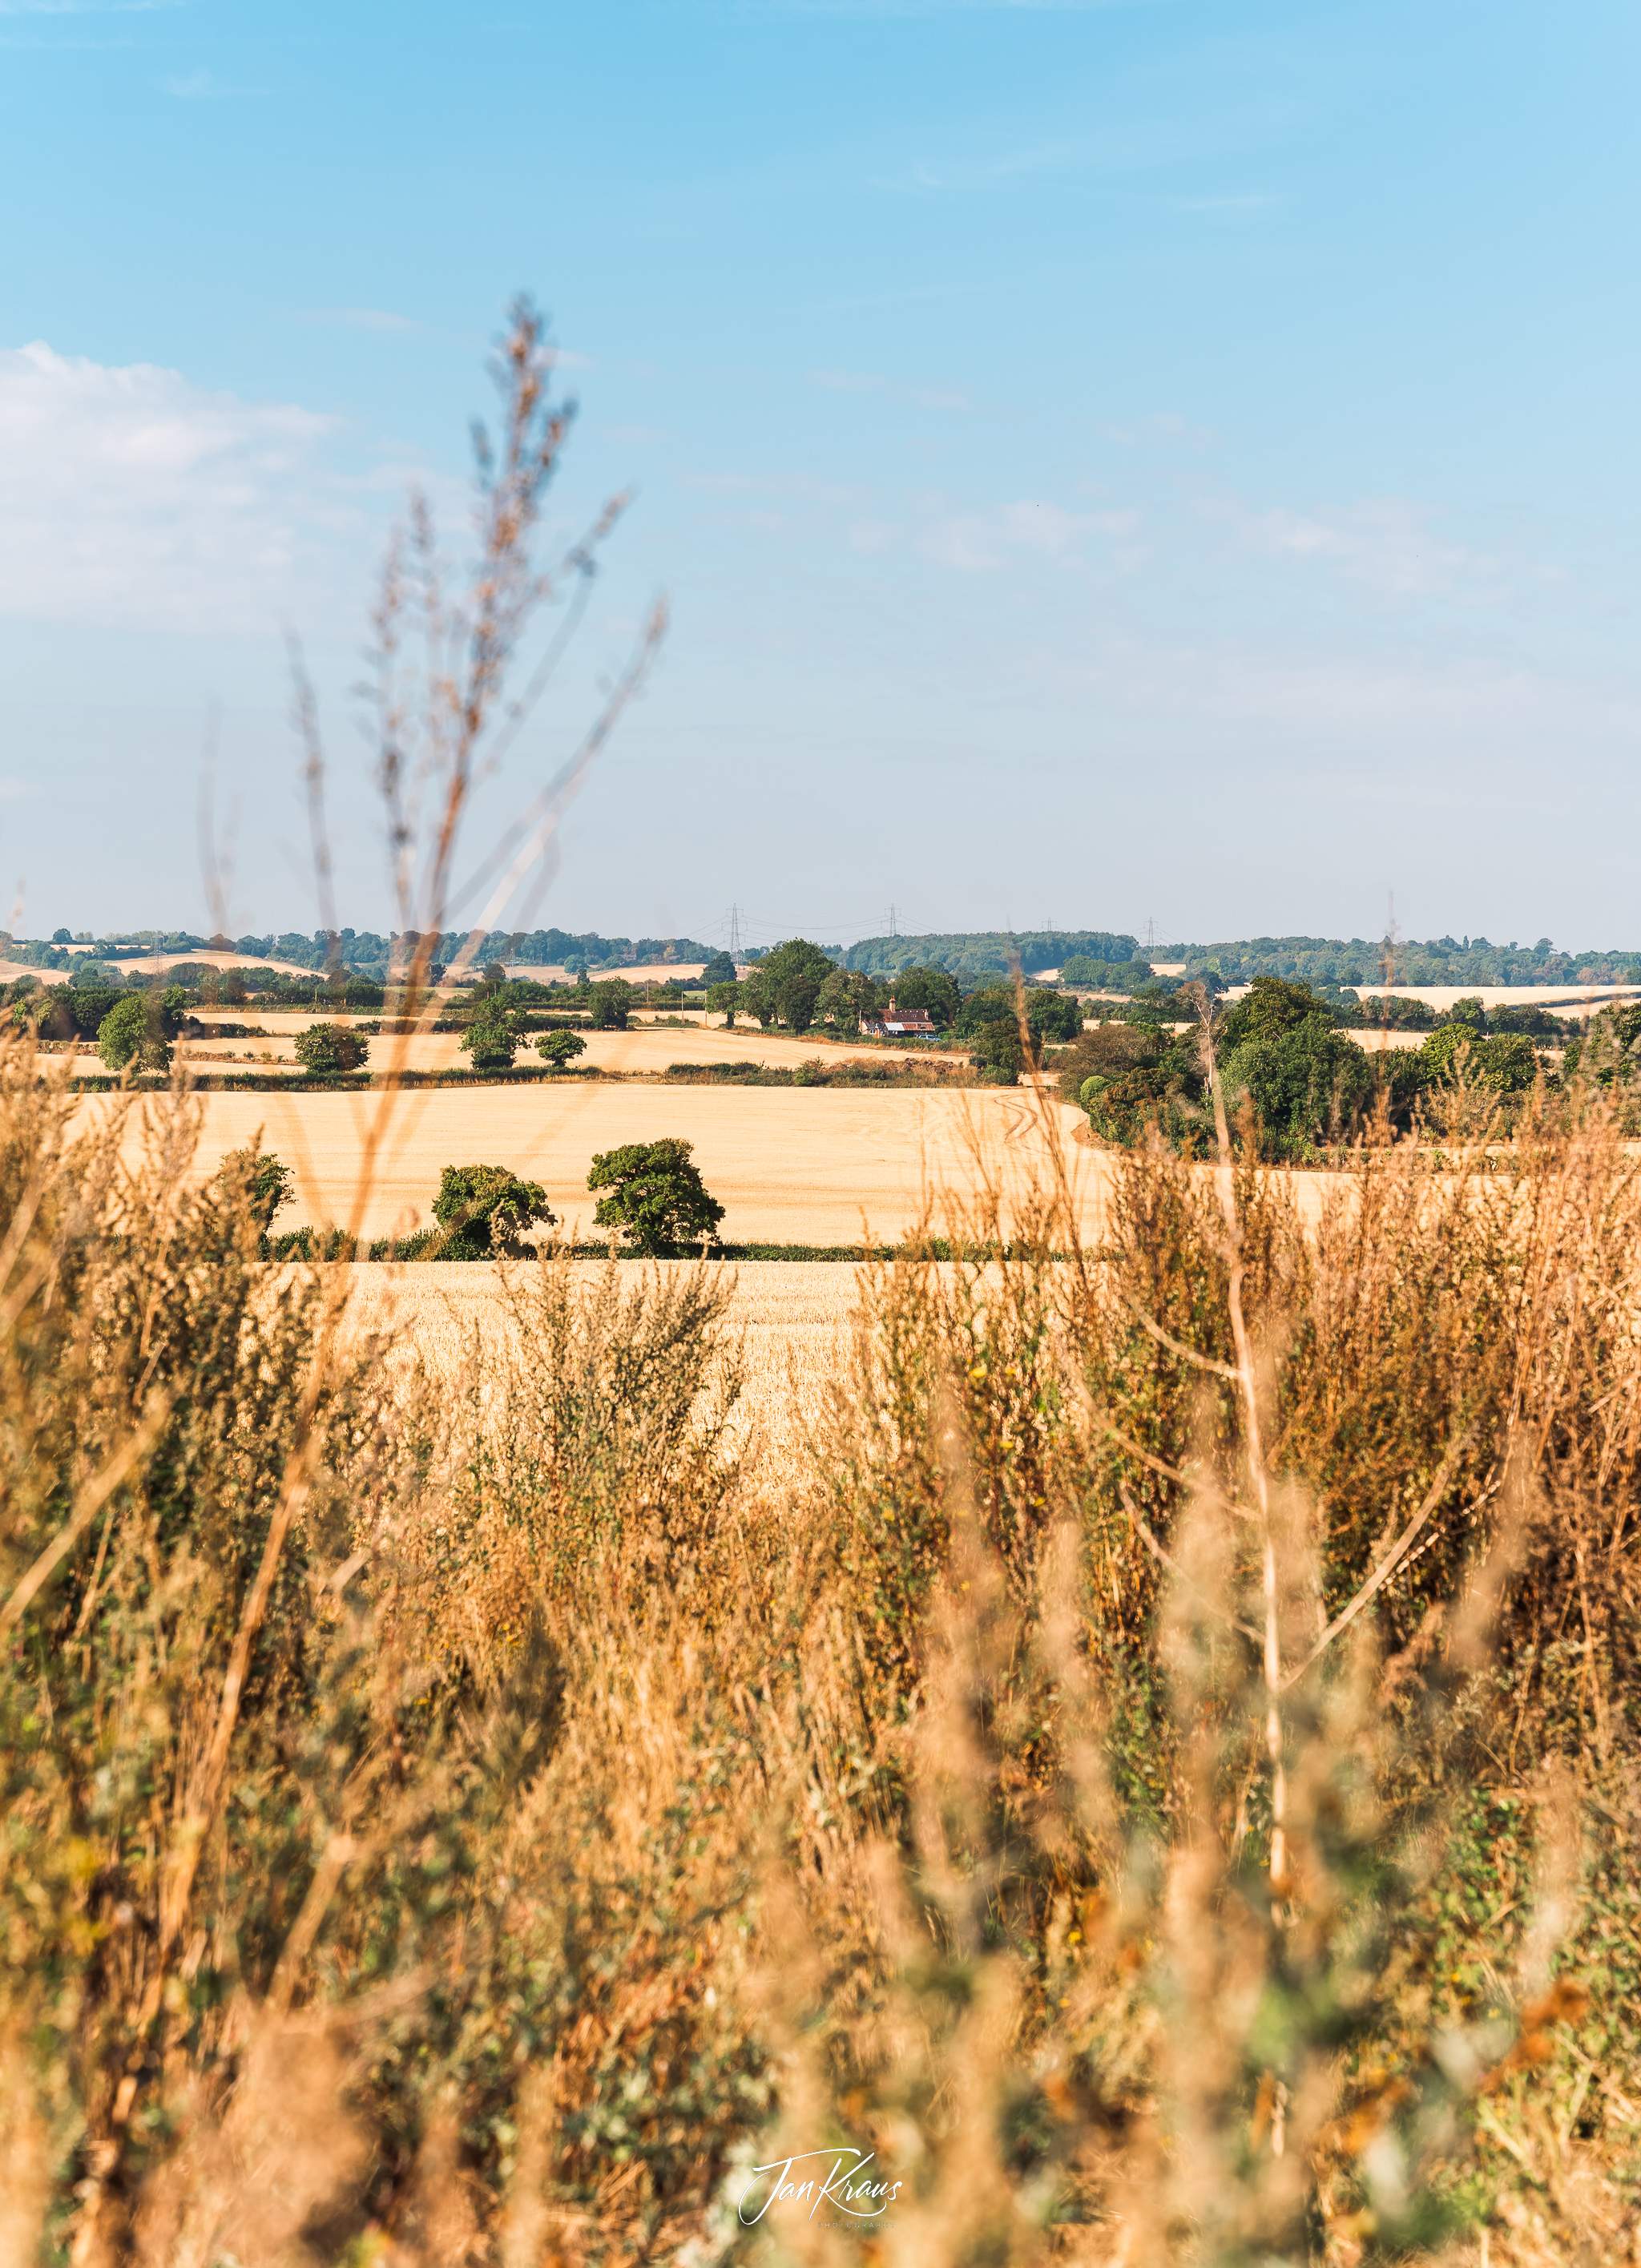 Summer view of harvested grain fields, Hertfordshire, England, UK